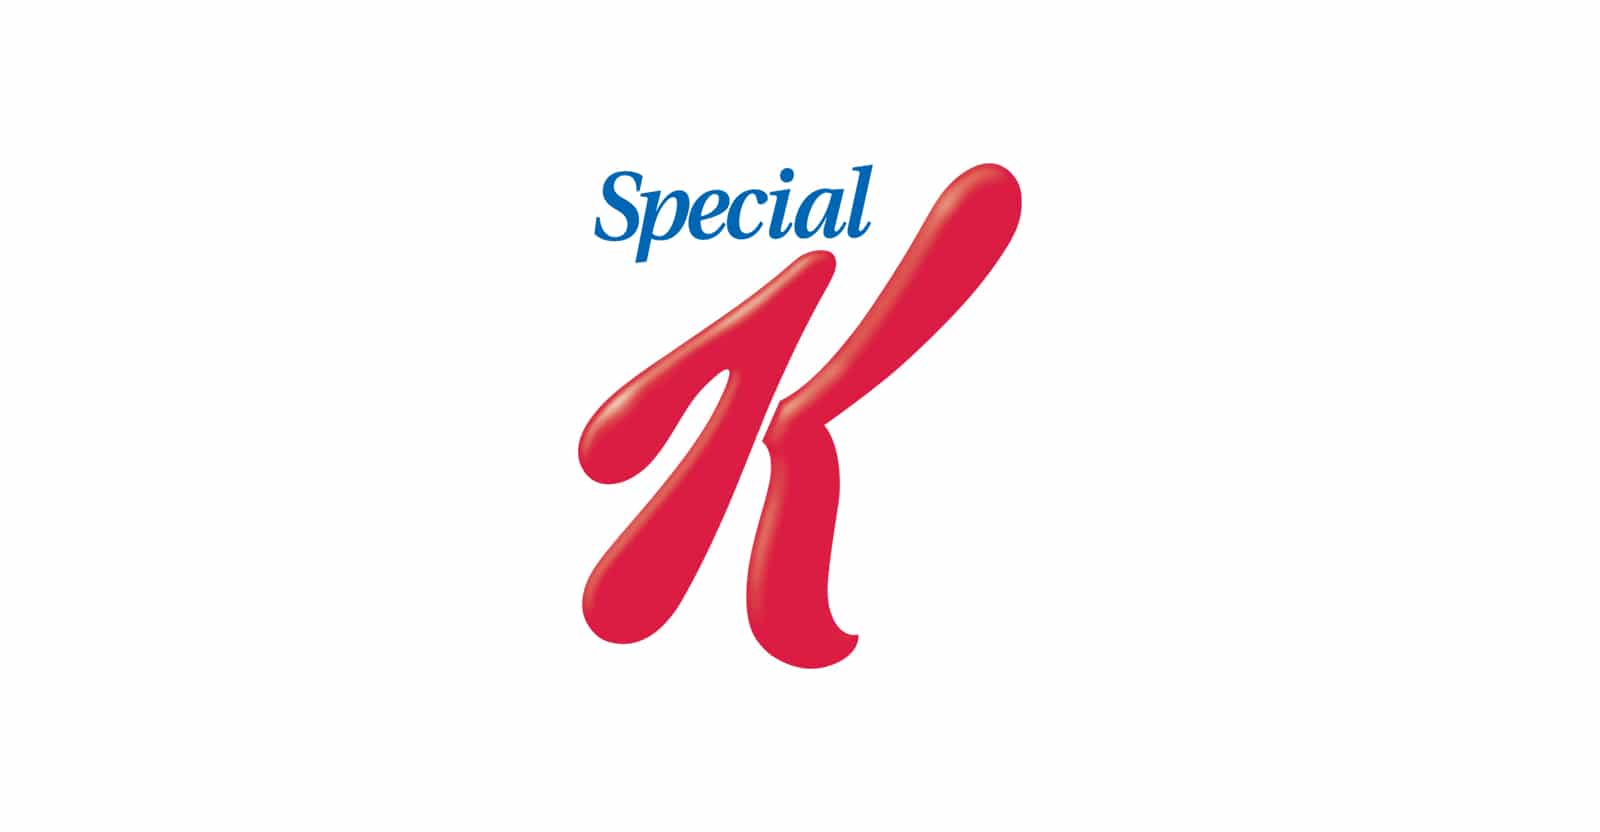 is special k gluten-free